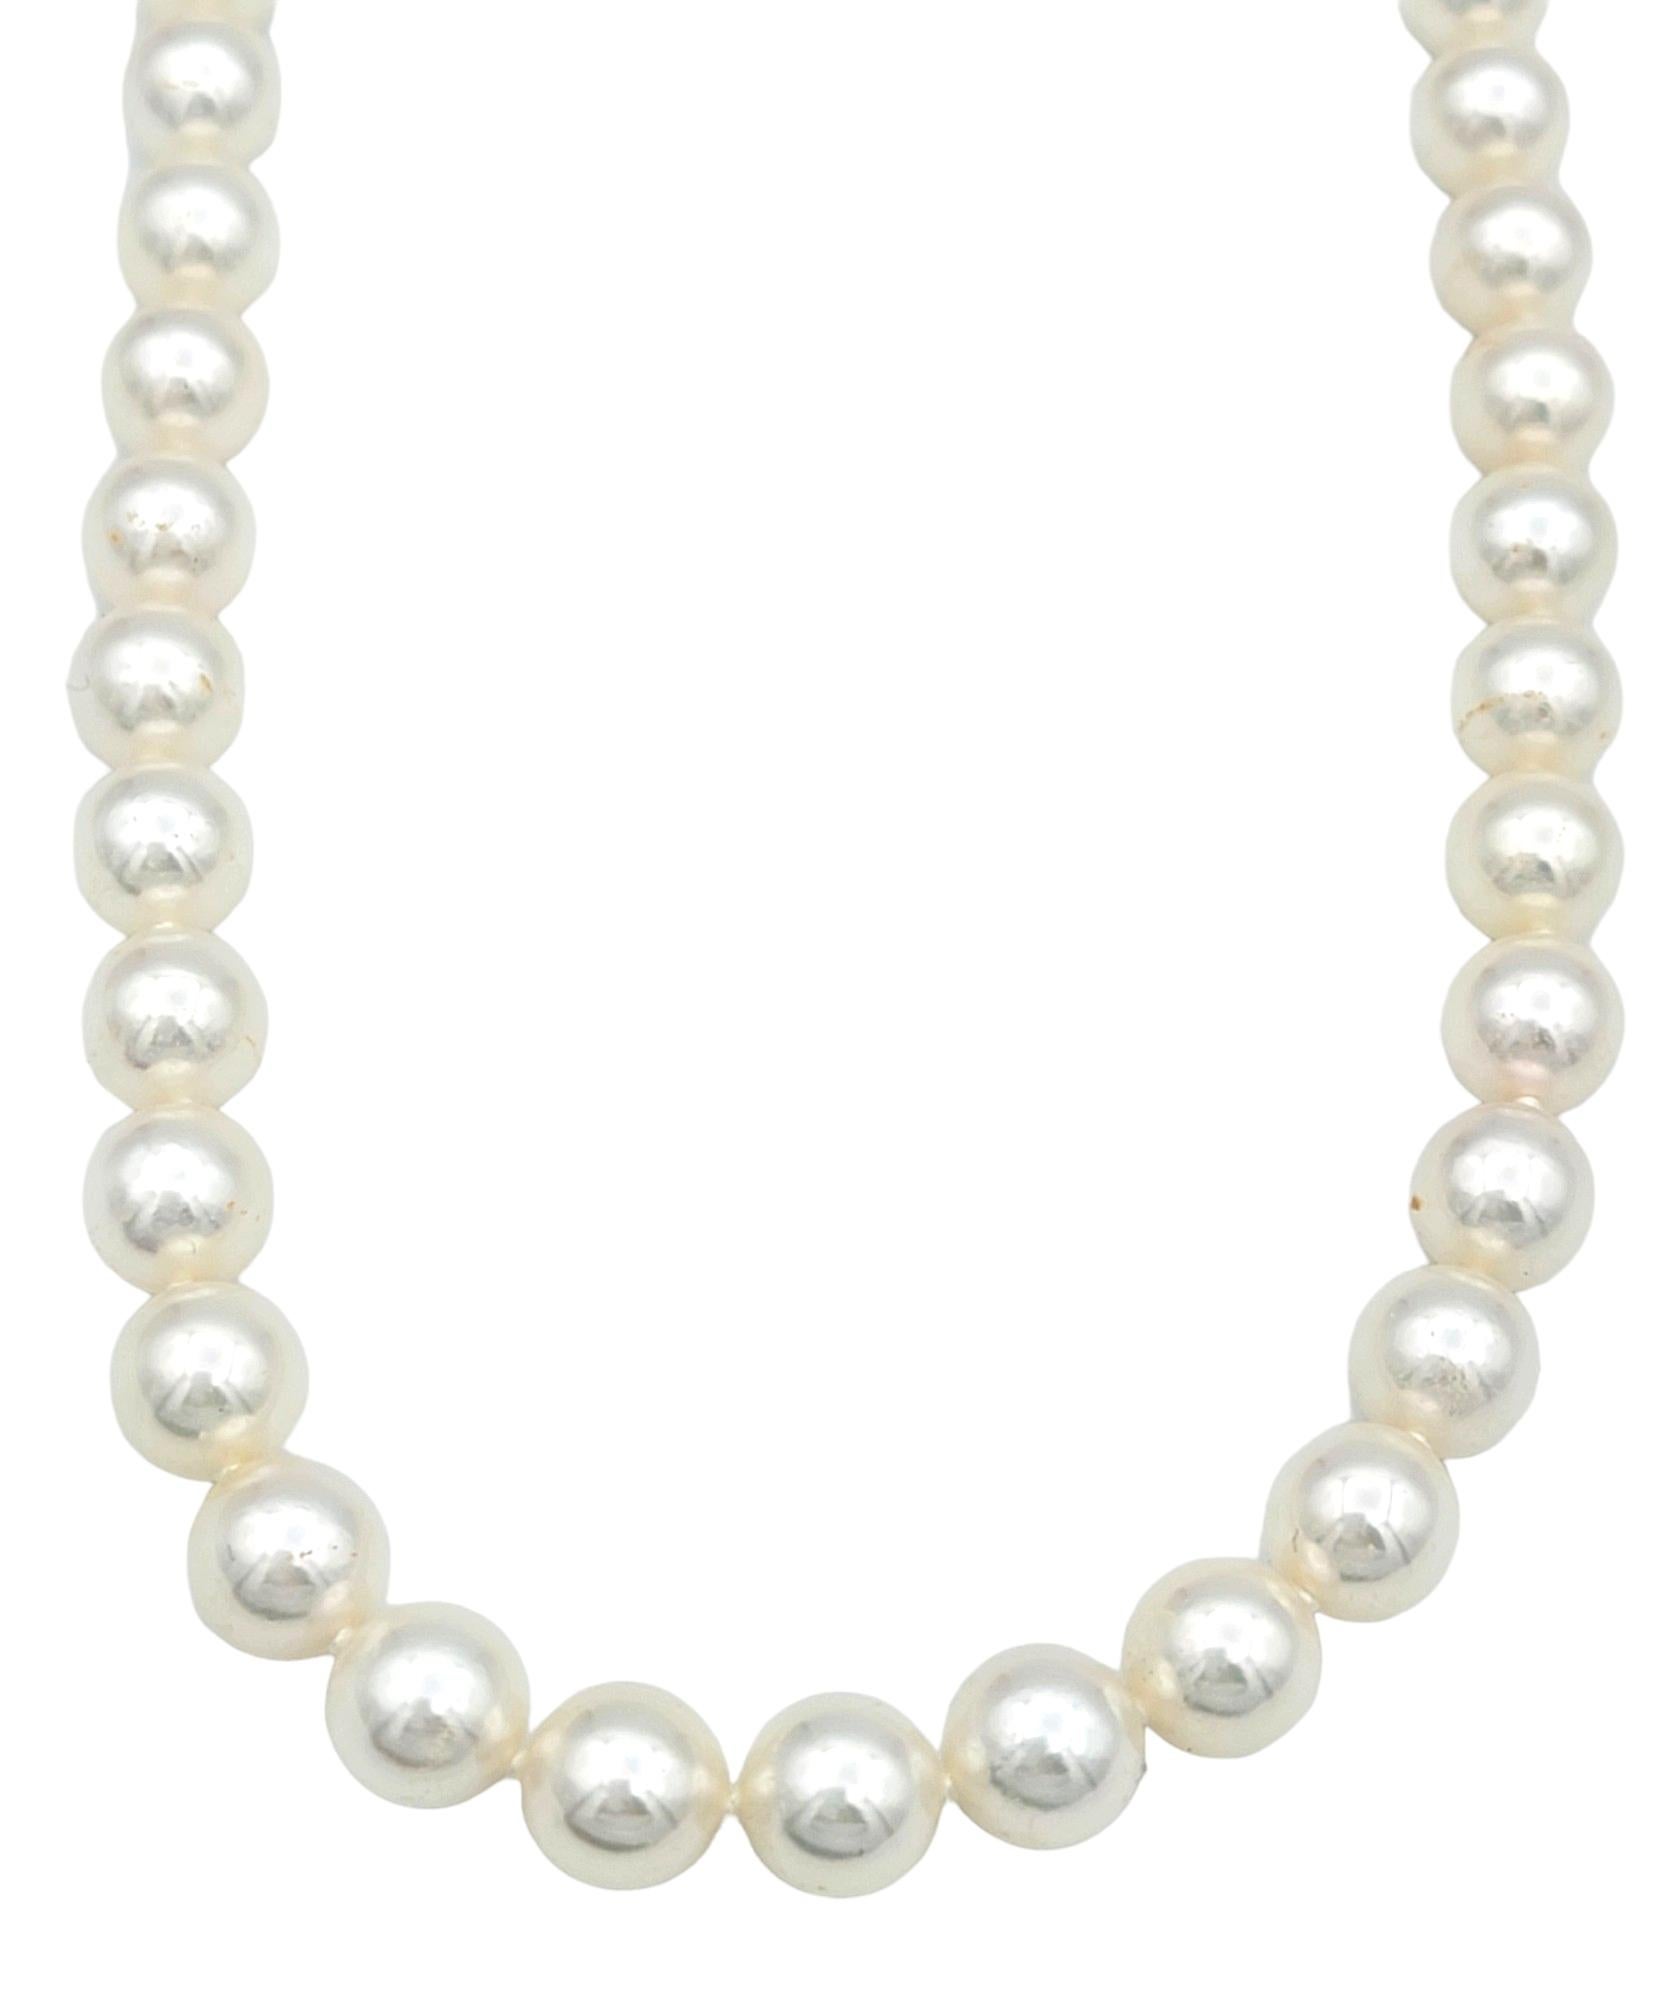 mikimoto 16 inch pearl necklace